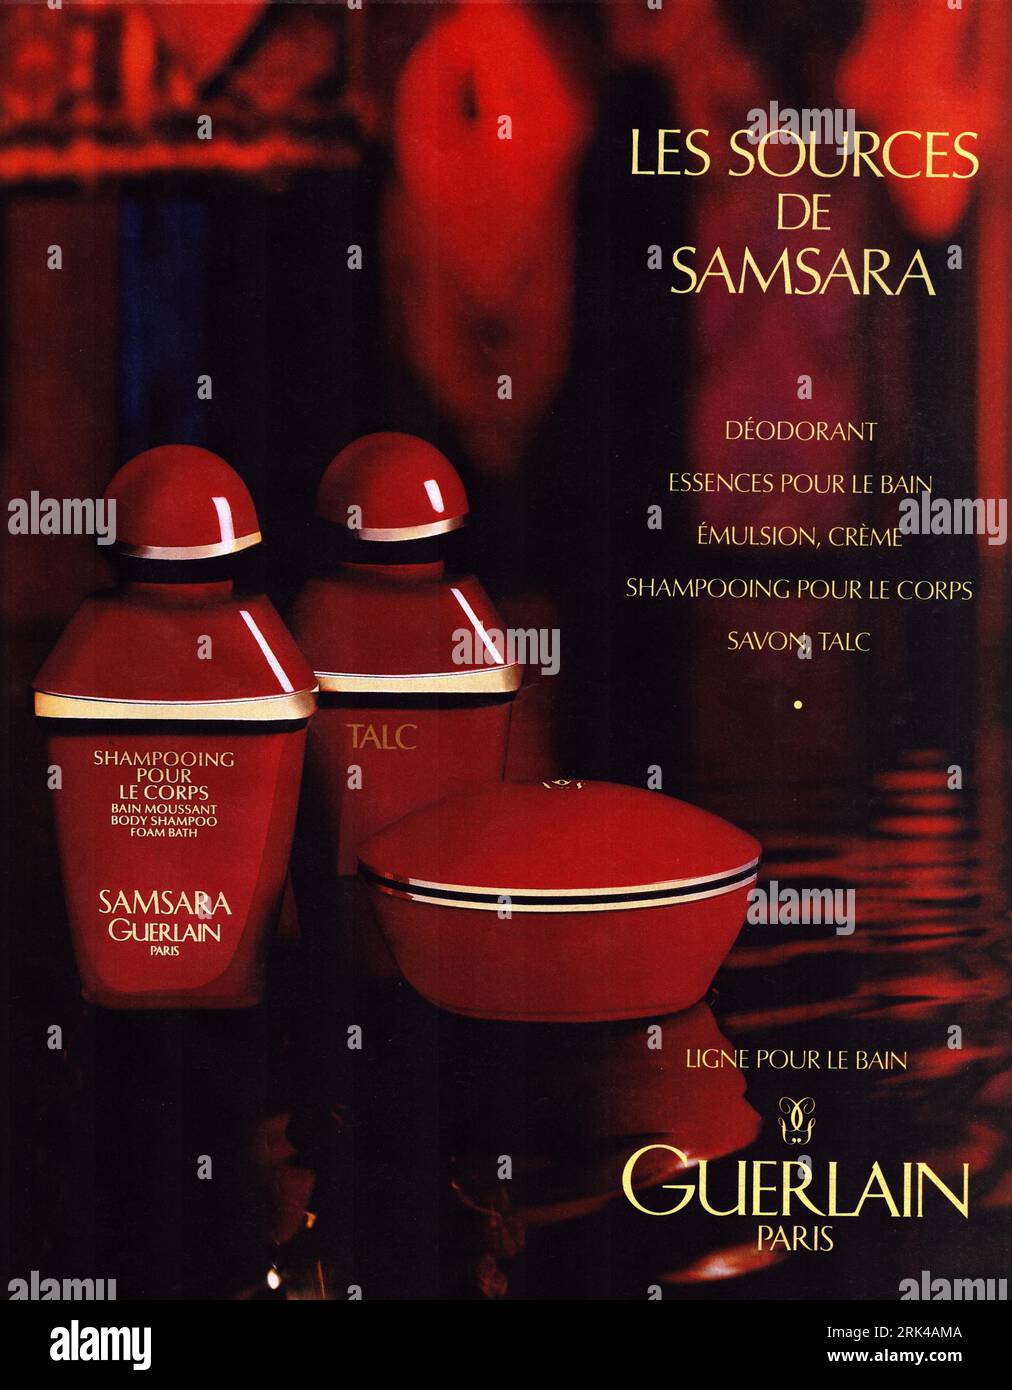 Les Sources de Samsara French Samsara advertisement Samsara publicite Guerlain Samsara commercial Stock Photo